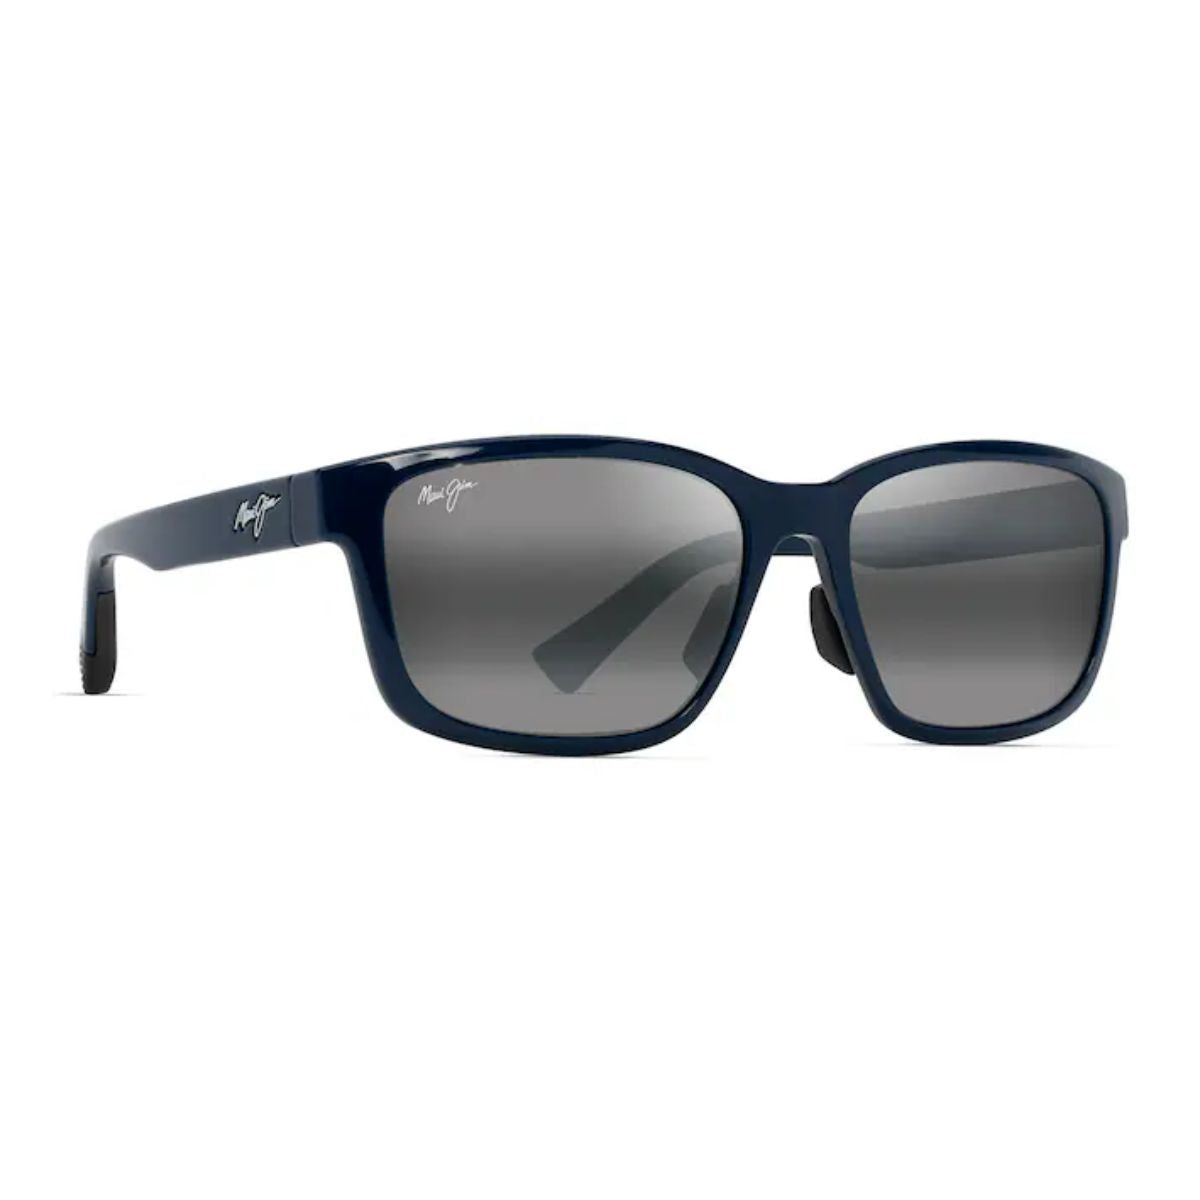 "Best Polarized Cooling Goggles For Men's At Online | Maui Jim Sunglasses For Men's"